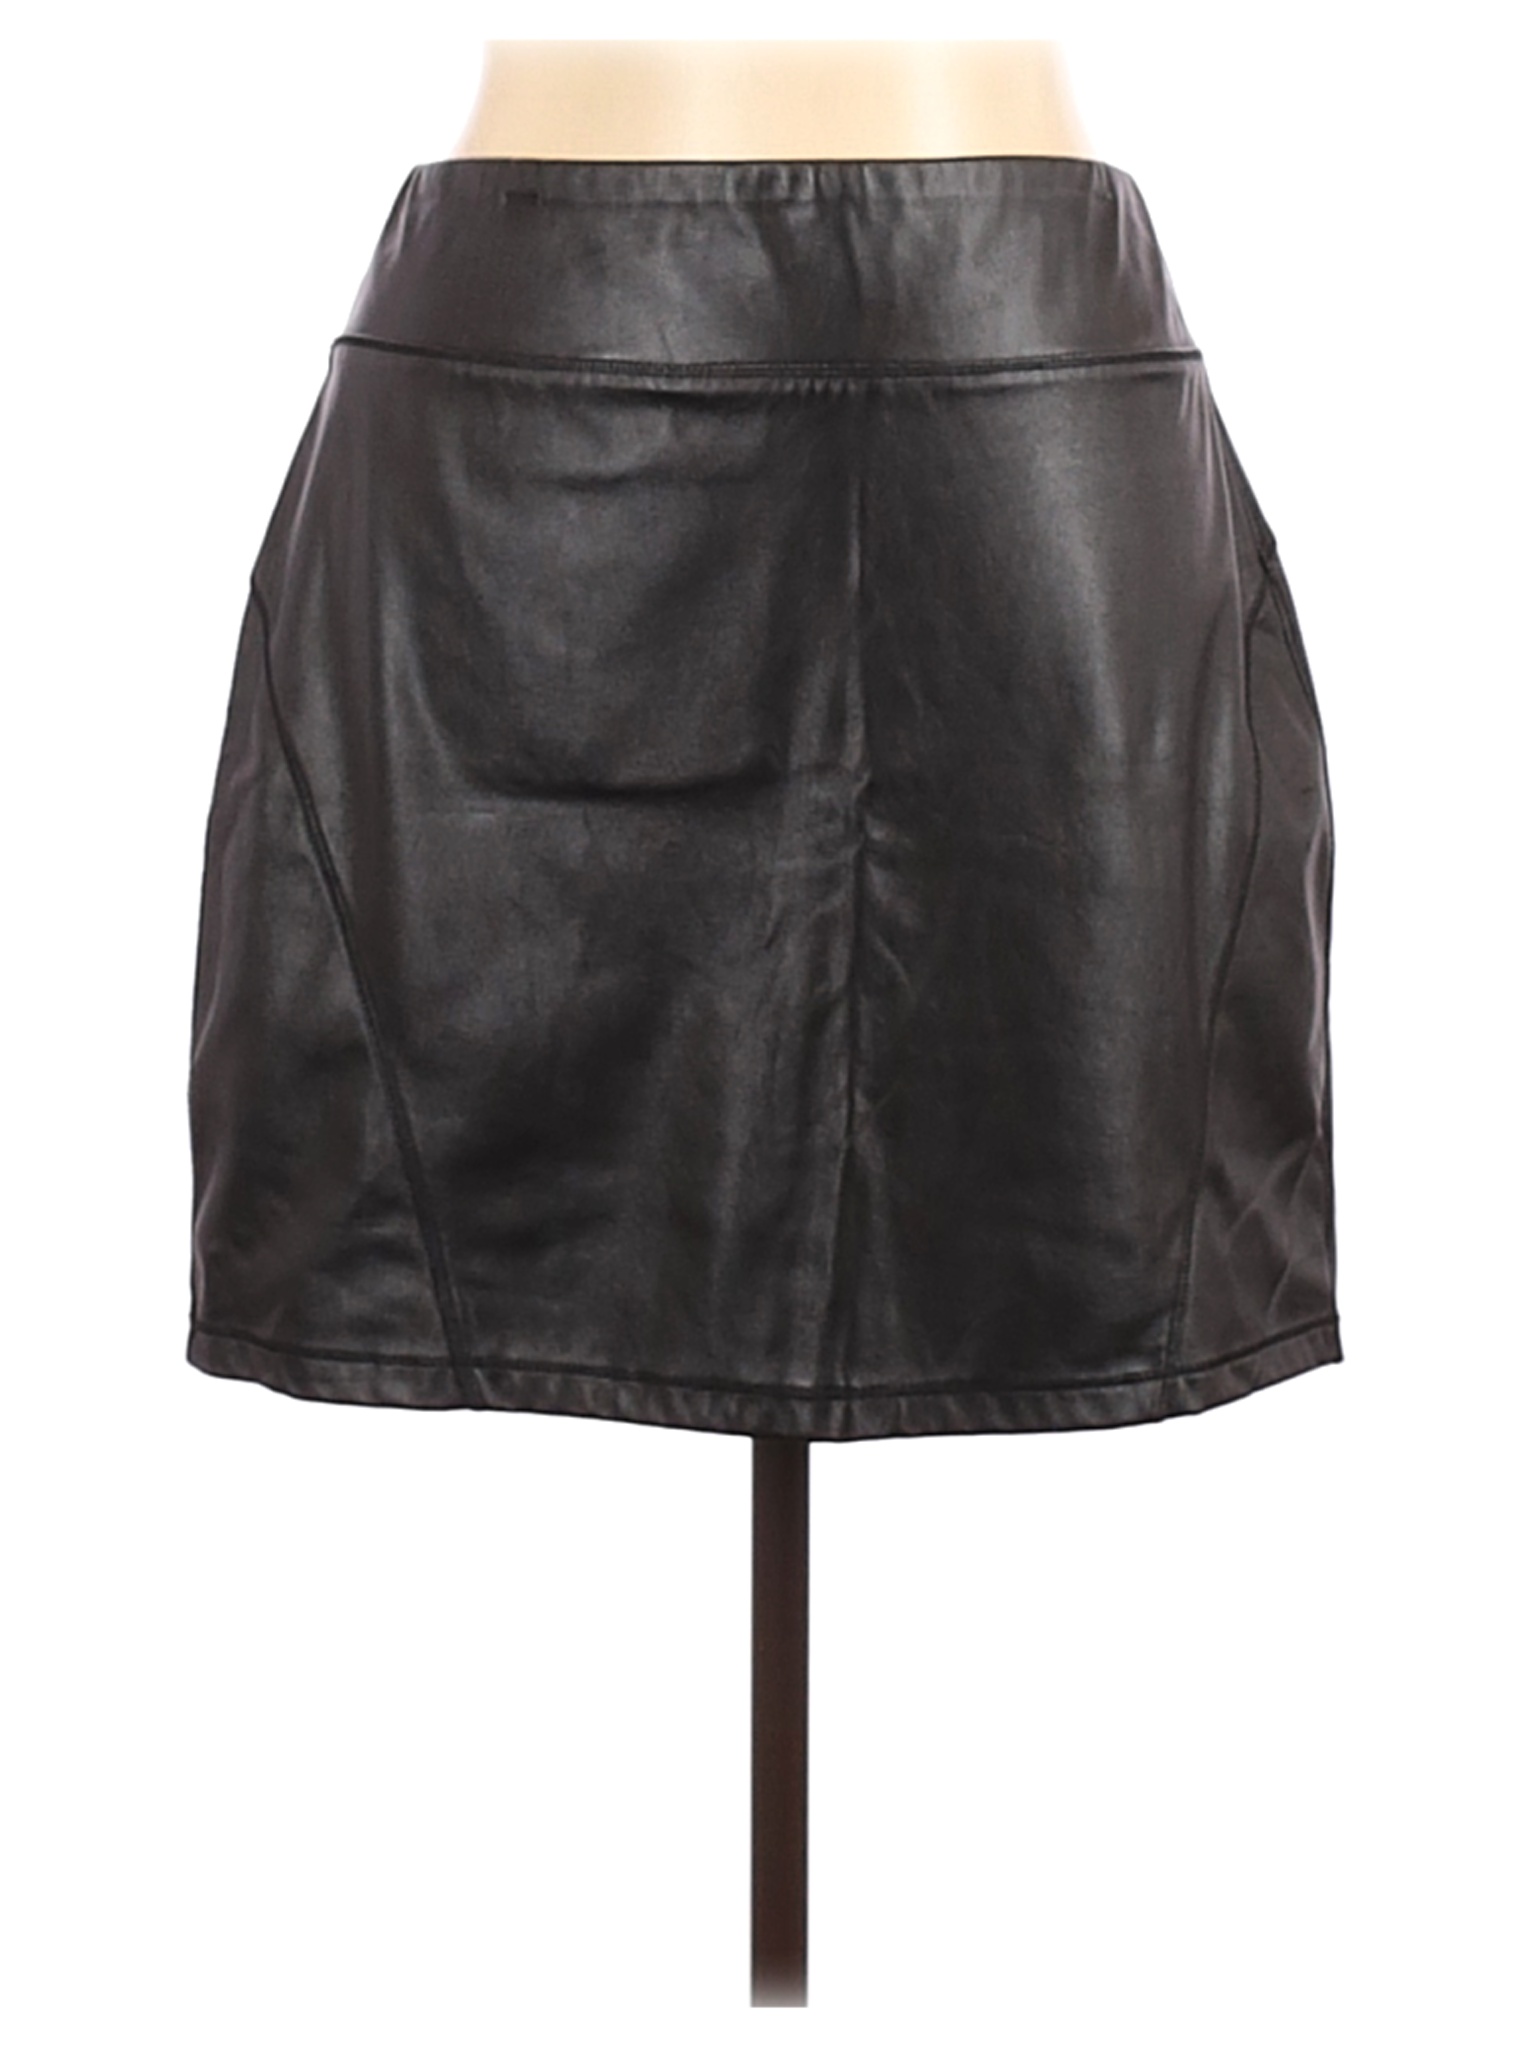 Express Women Black Faux Leather Skirt L | eBay